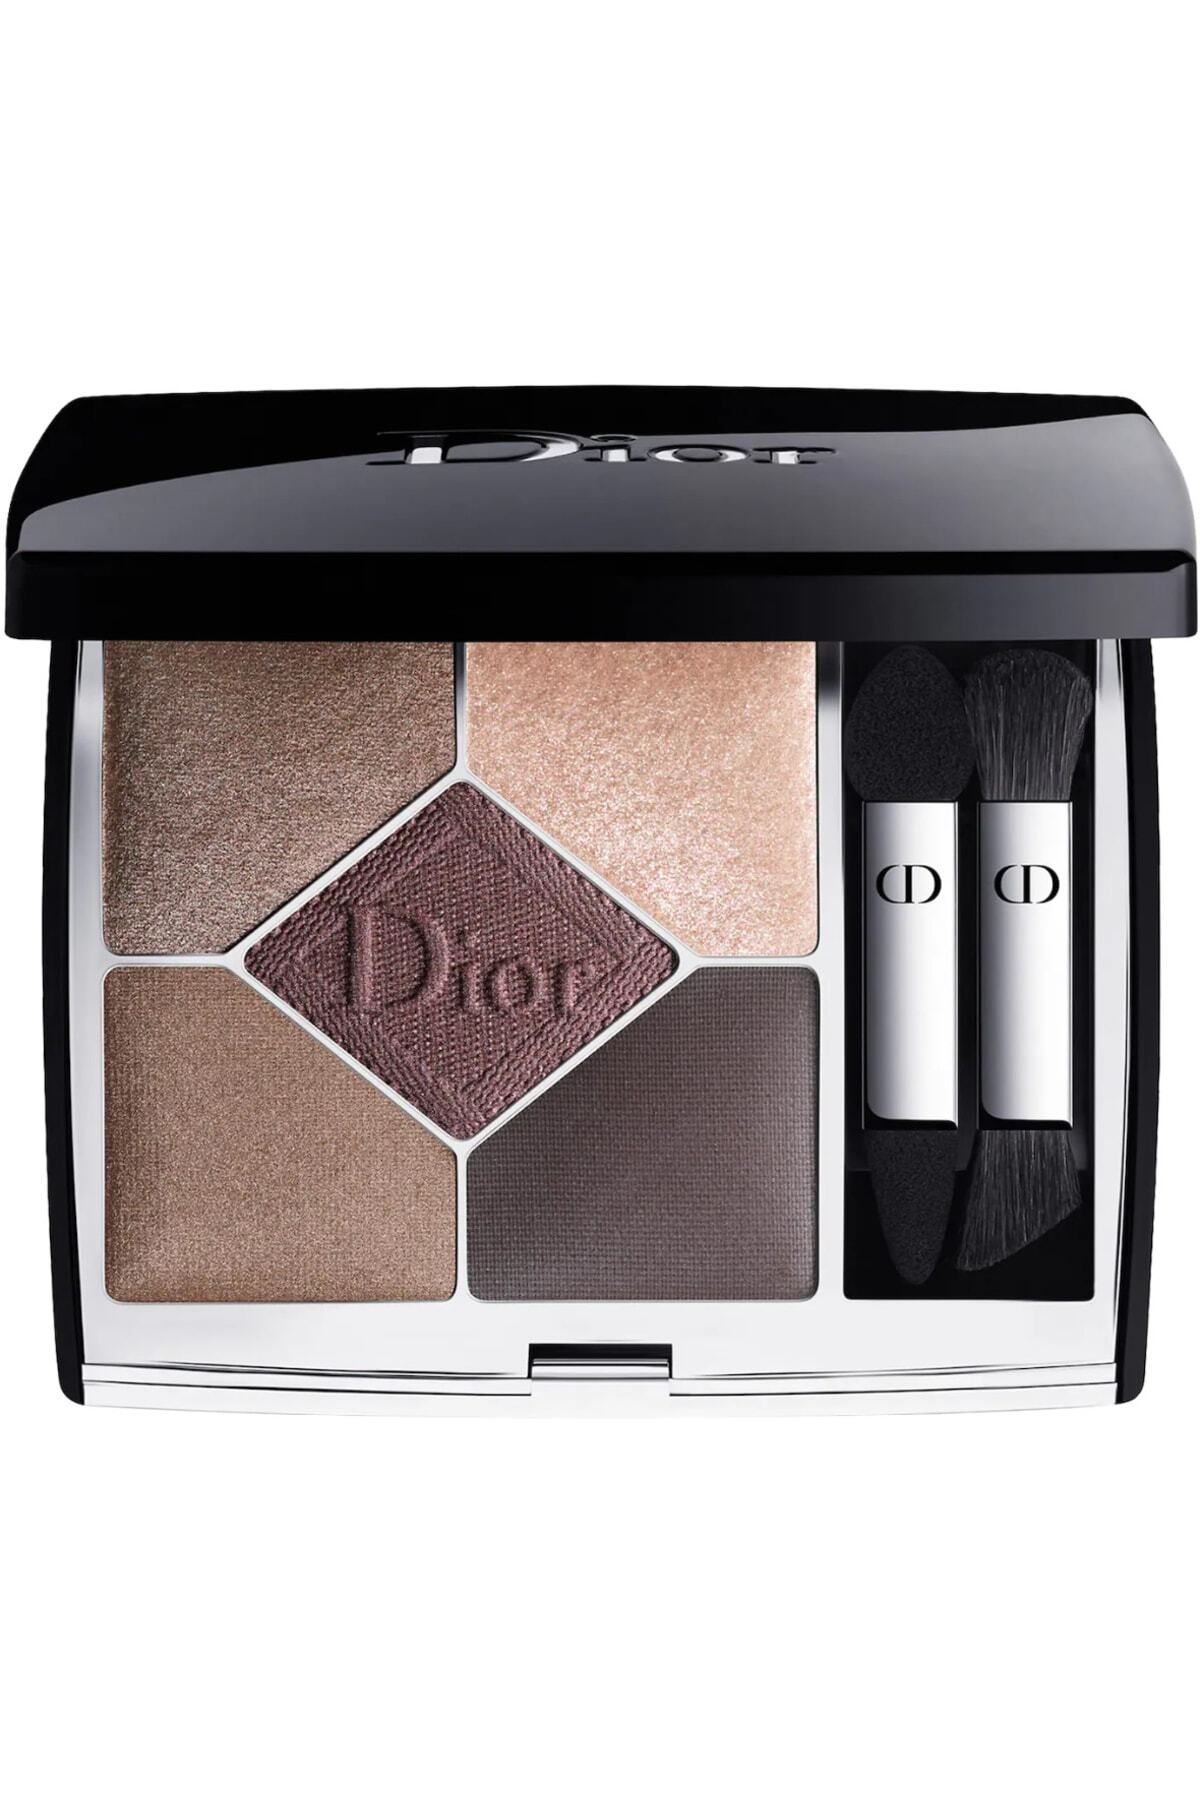 Dior Aloe Vera ve Çam Yağı İçerikli 5 Couleurs Couture Eyeshadow Palette...599 New Look